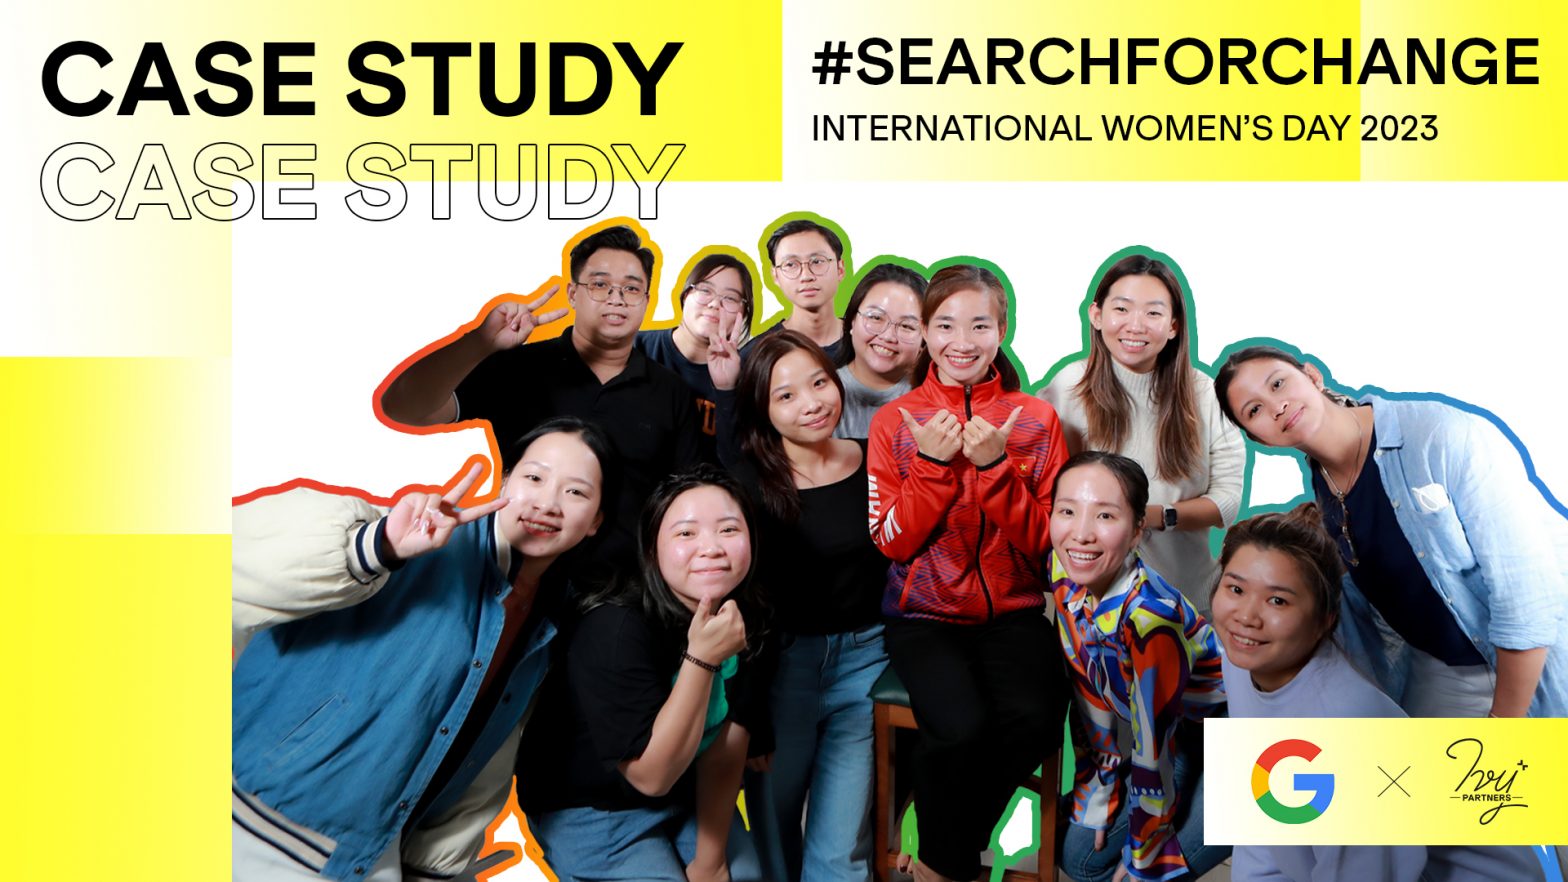 GOOGLE INTERNATIONAL WOMEN’S DAY 2023 CAMPAIGN: #SEARCHFORCHANGE #IWD2023